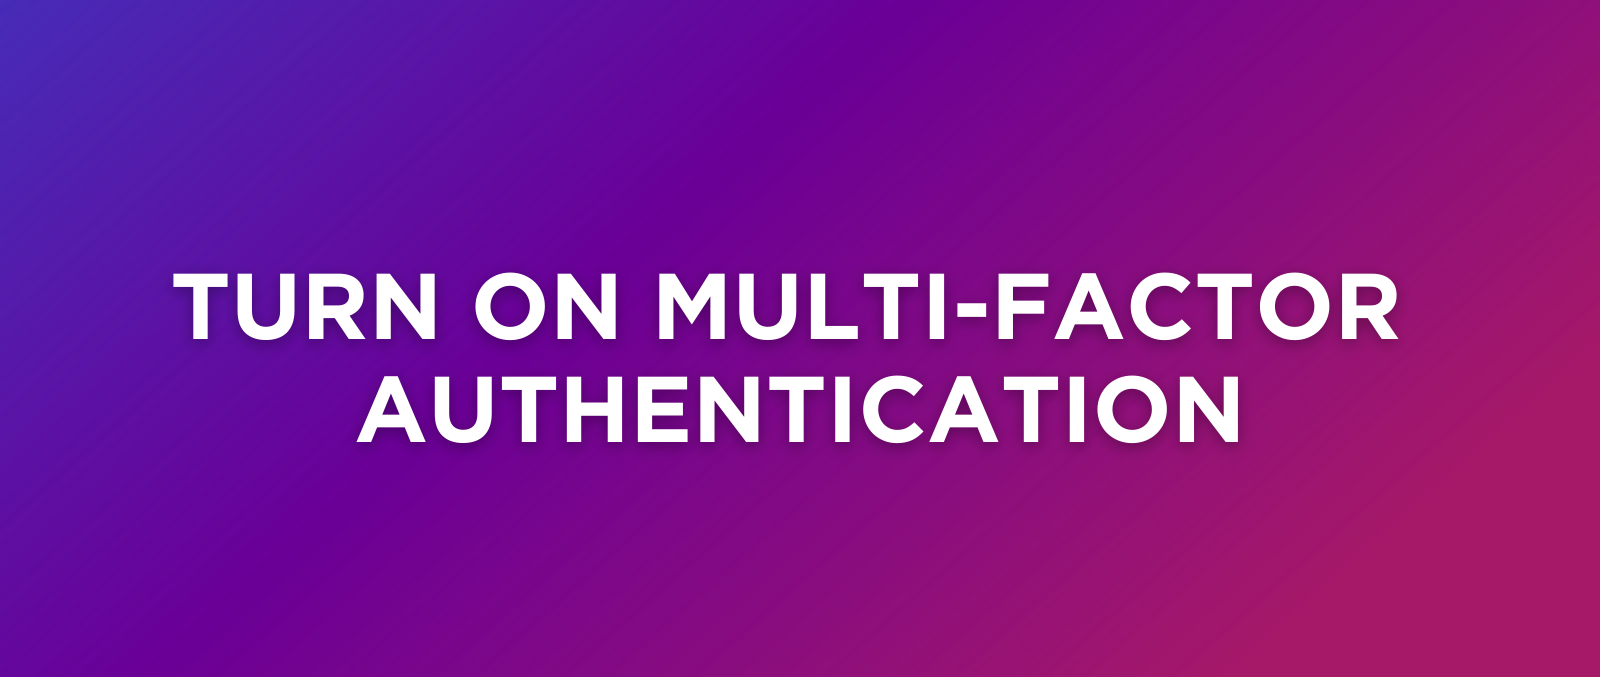 Turn On Multi-Factor Authentication